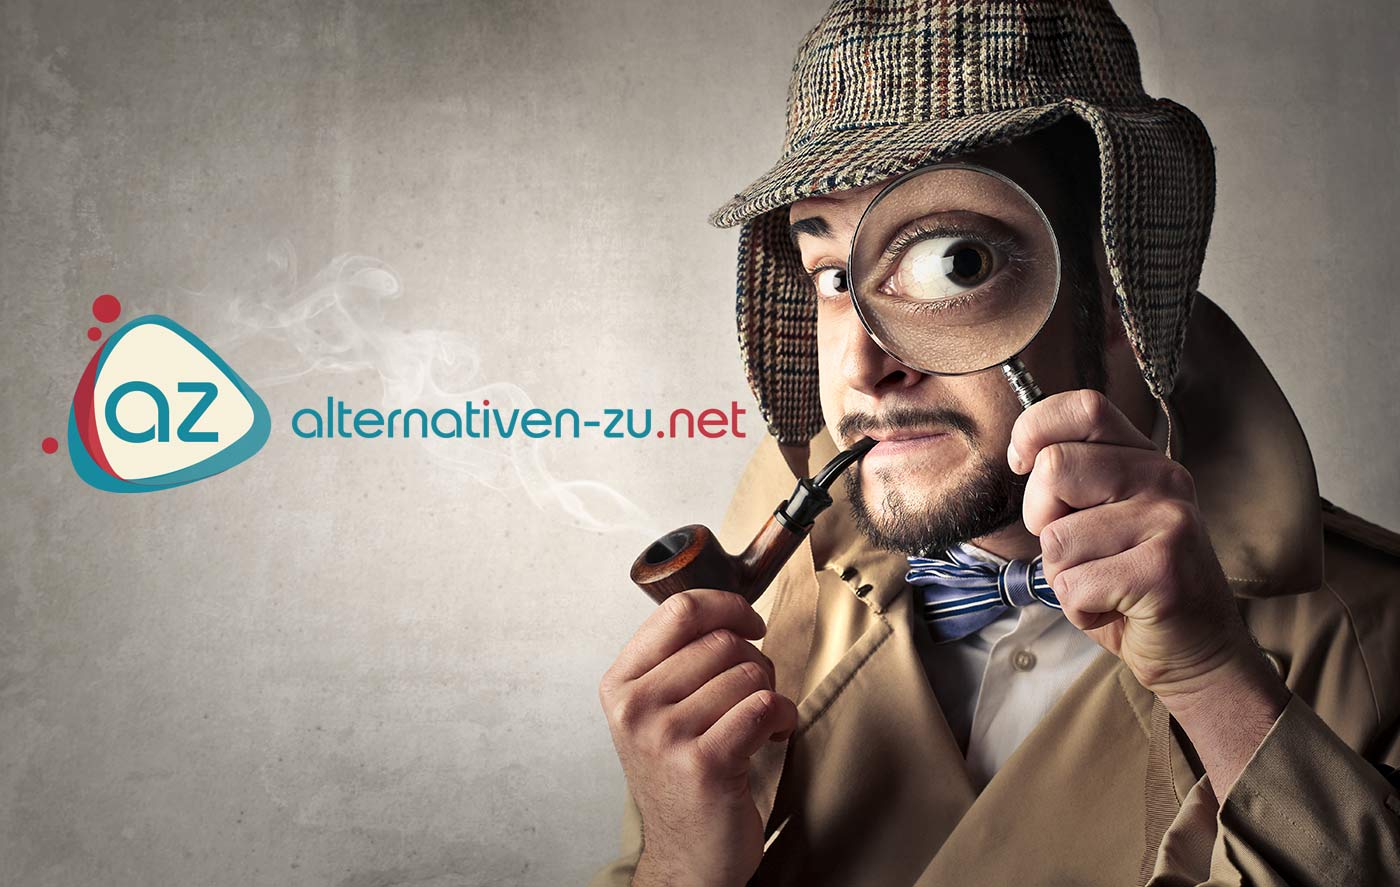 (c) Alternativen-zu.net